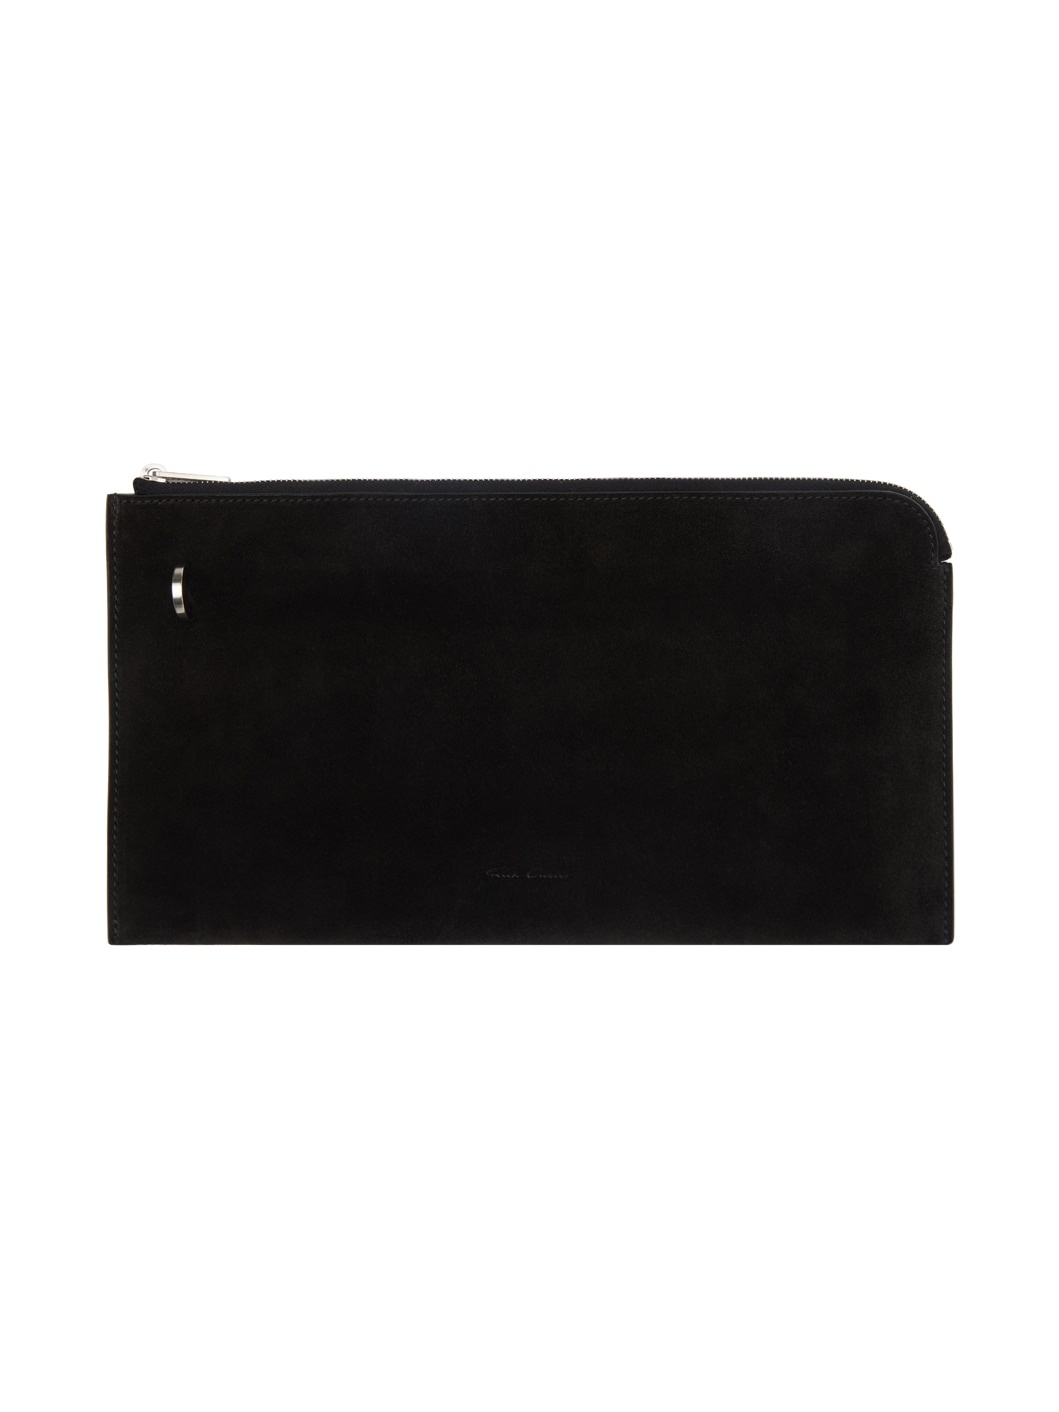 Black Invite Envelope Wallet - 1